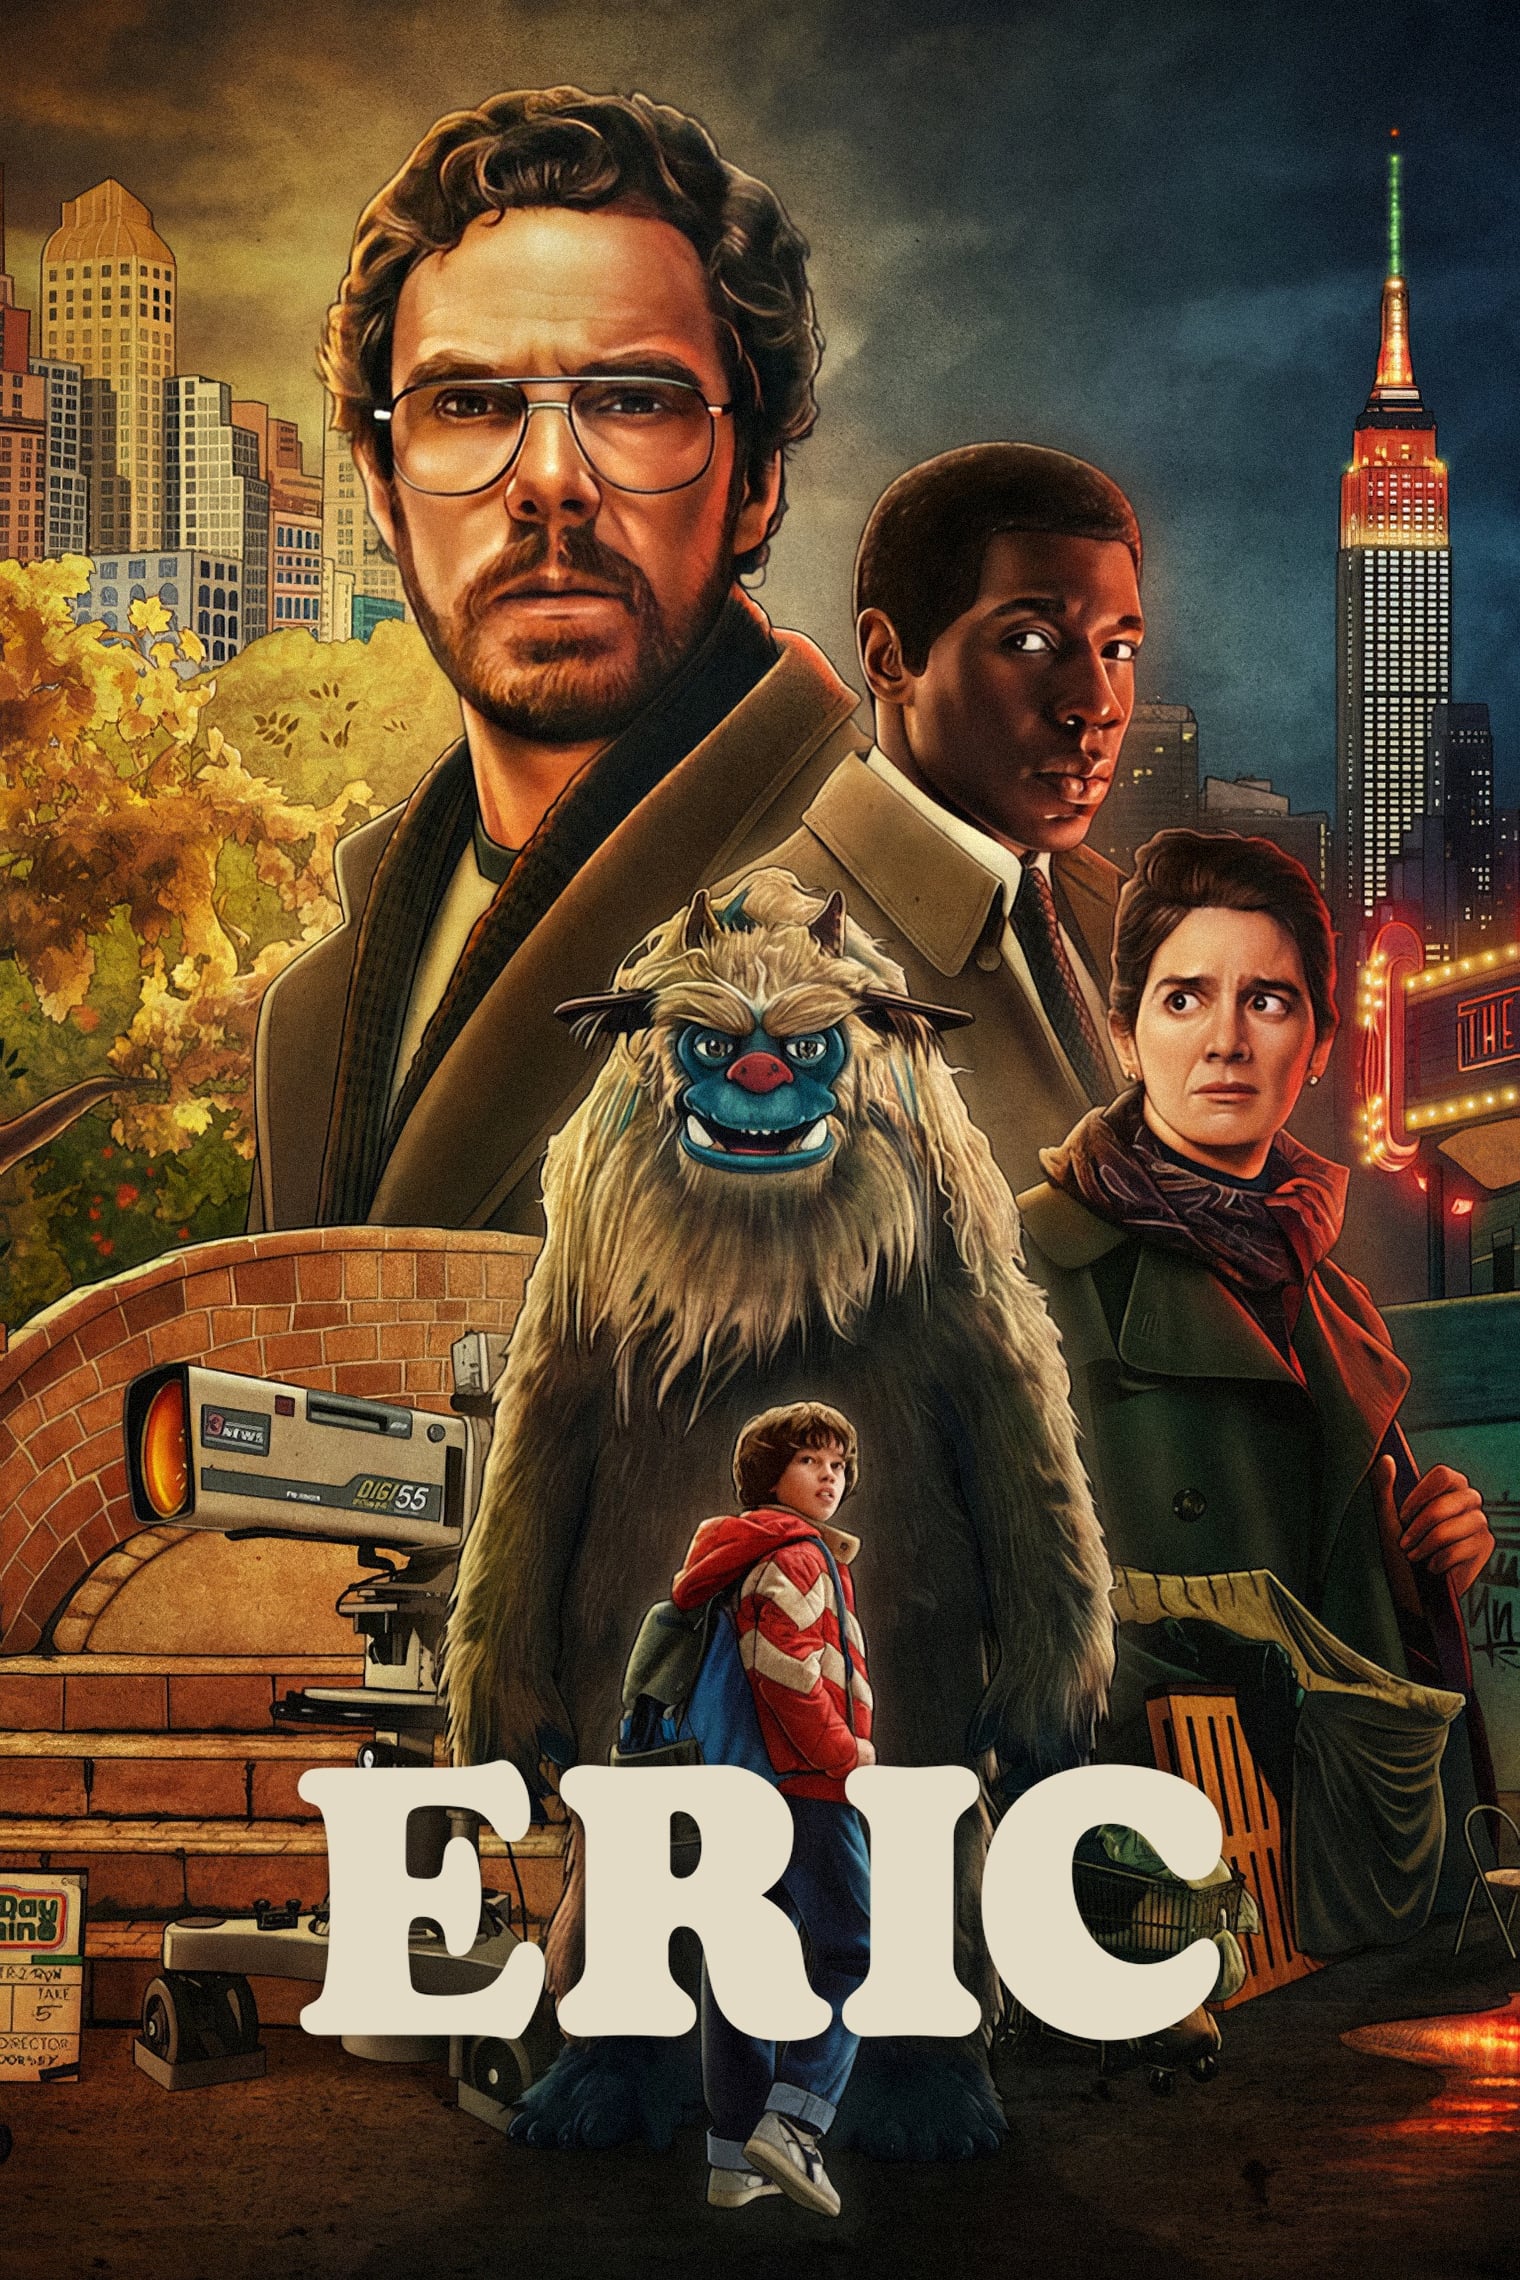 Plakát pro film “Eric”